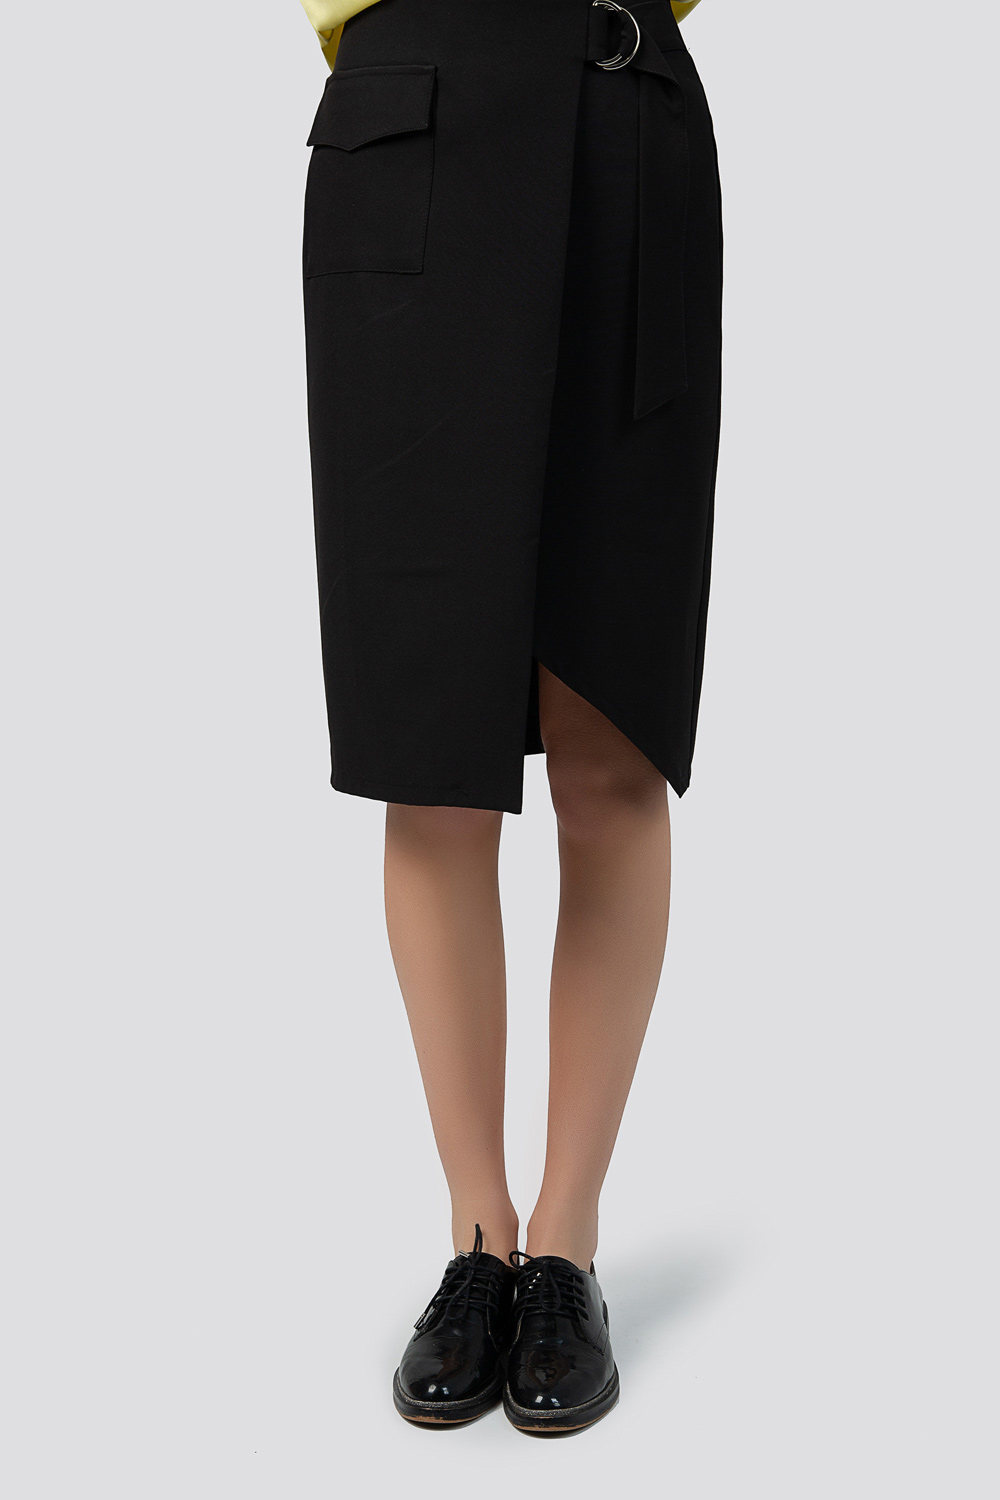 Black asymmetrical drawstring skirt